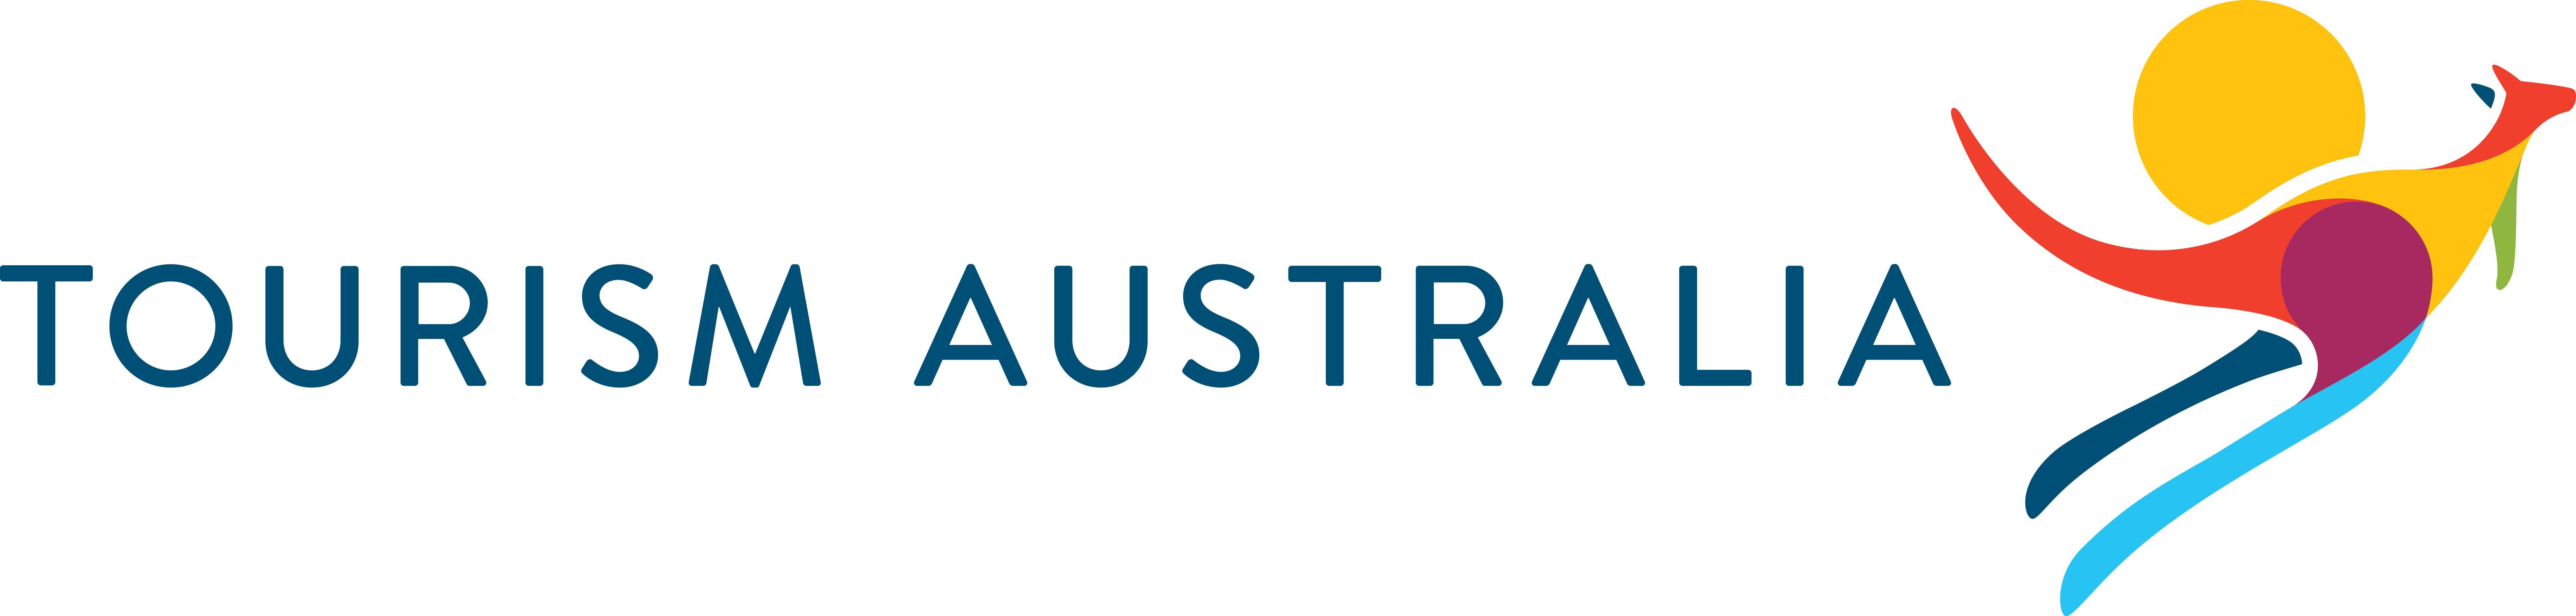 Tourism Australia Logo - Tourism Australia logo Victorian Tourism Awards